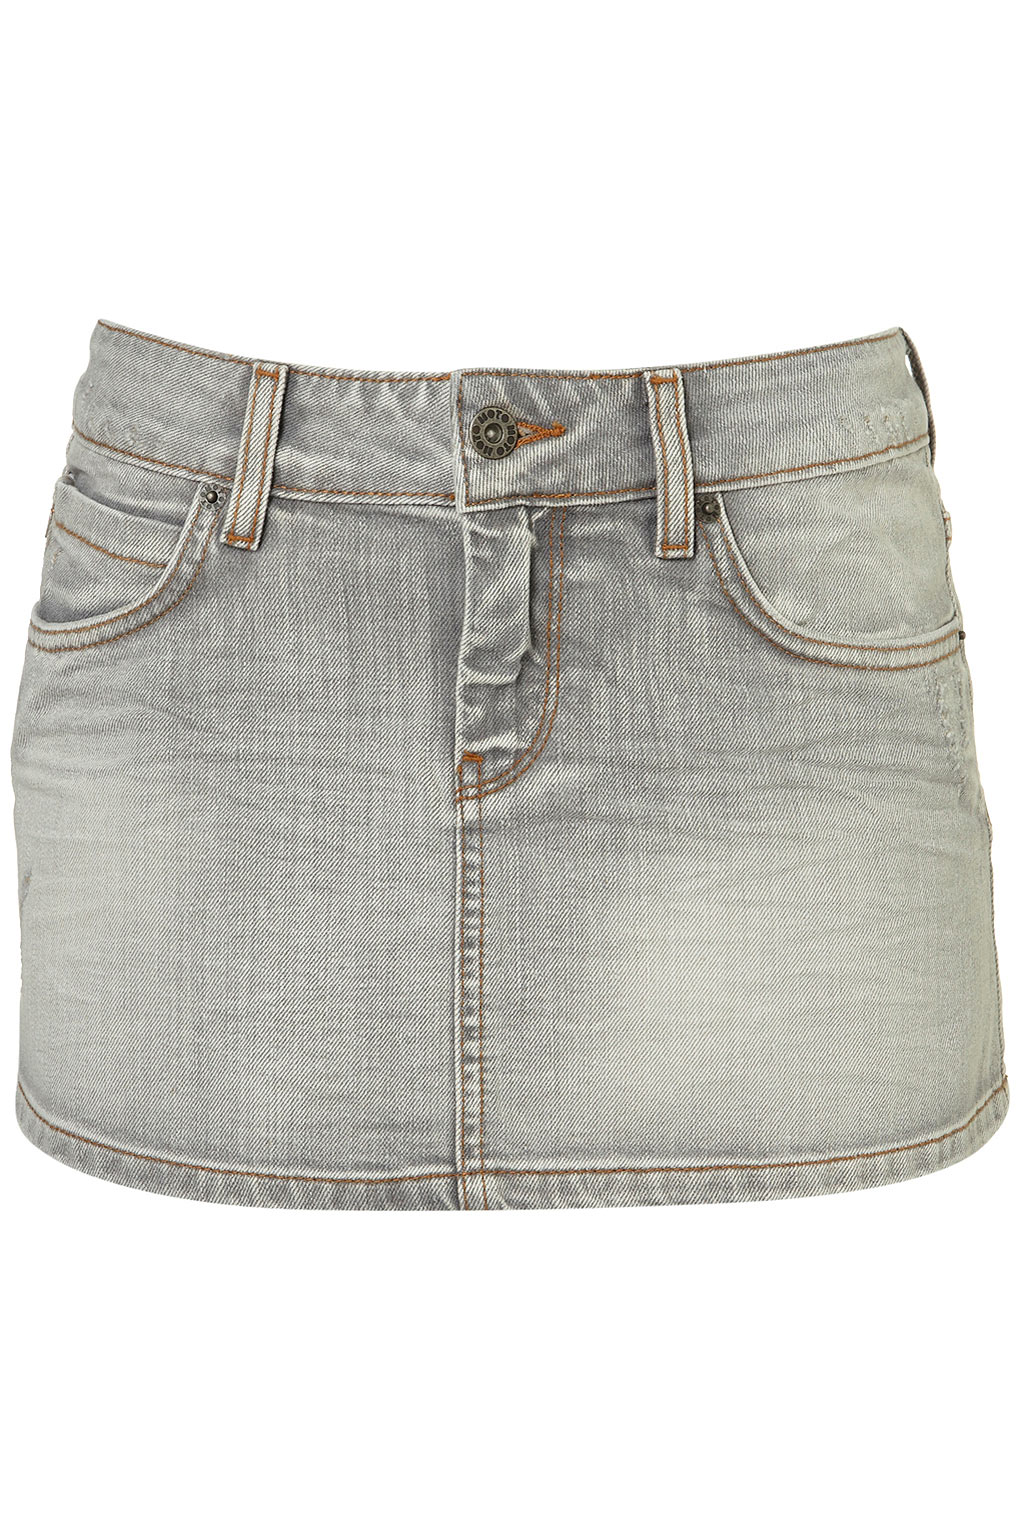 Lyst - Topshop Lauren Denim Mini Skirt in Gray